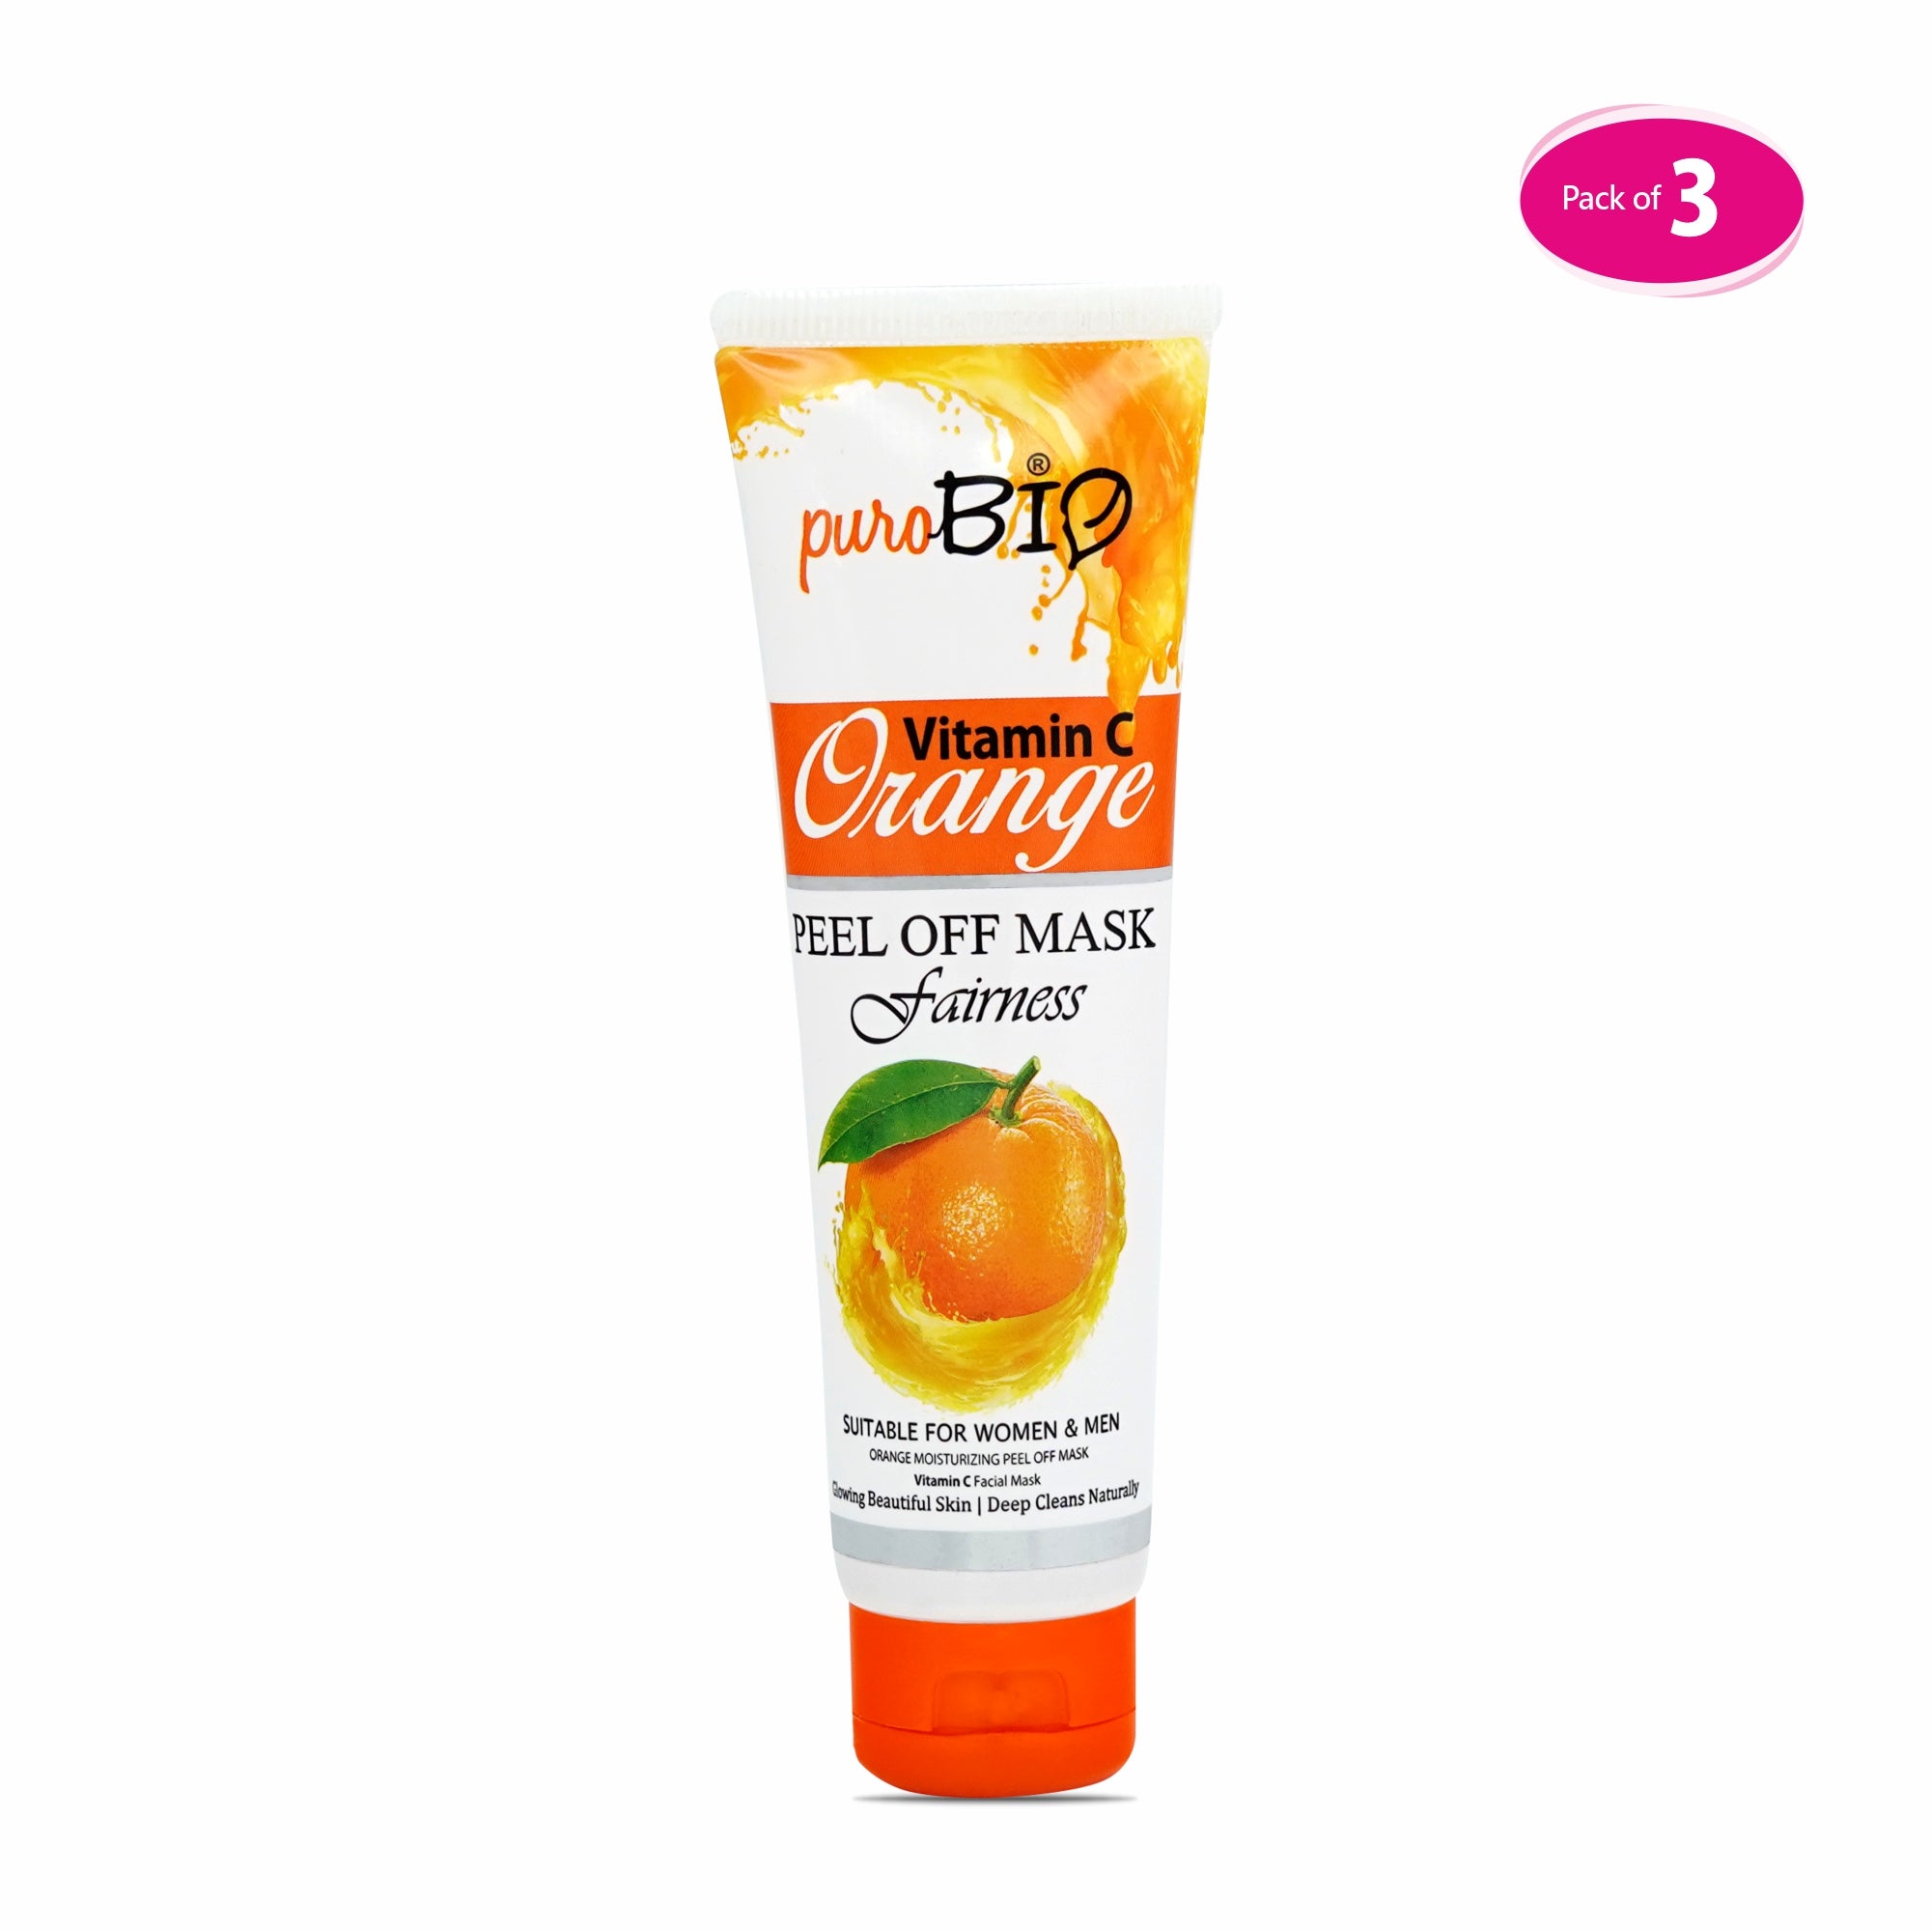 Vitamin-C Orange peel off mask in bulk 3 quantity